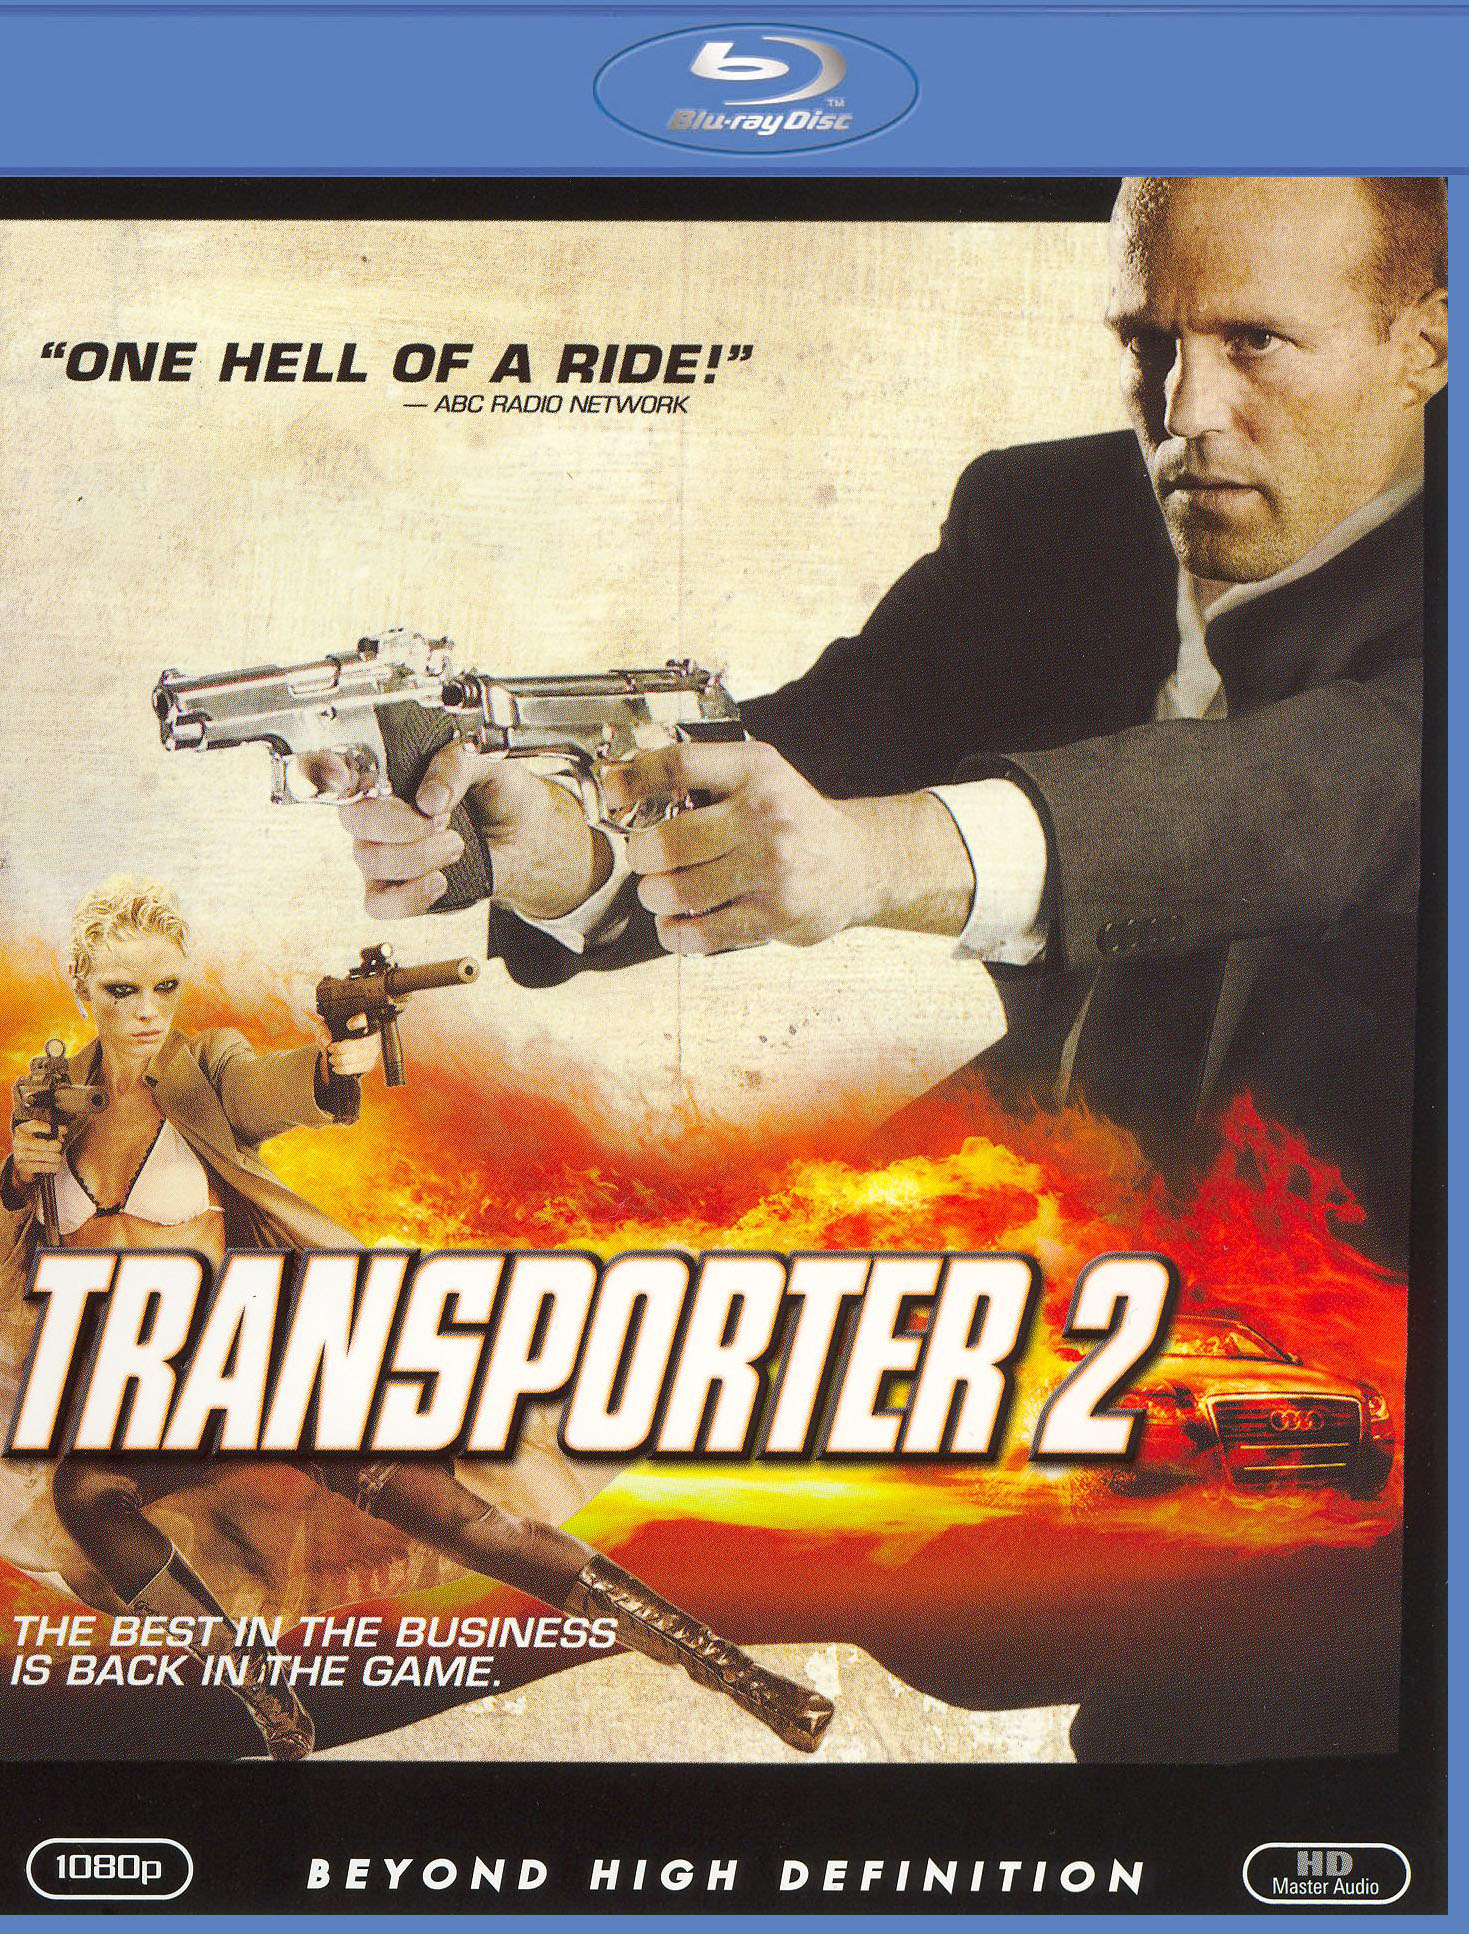 Transporter 2 (3/5) Movie CLIP - Auto Acrobatics (2005) HD 